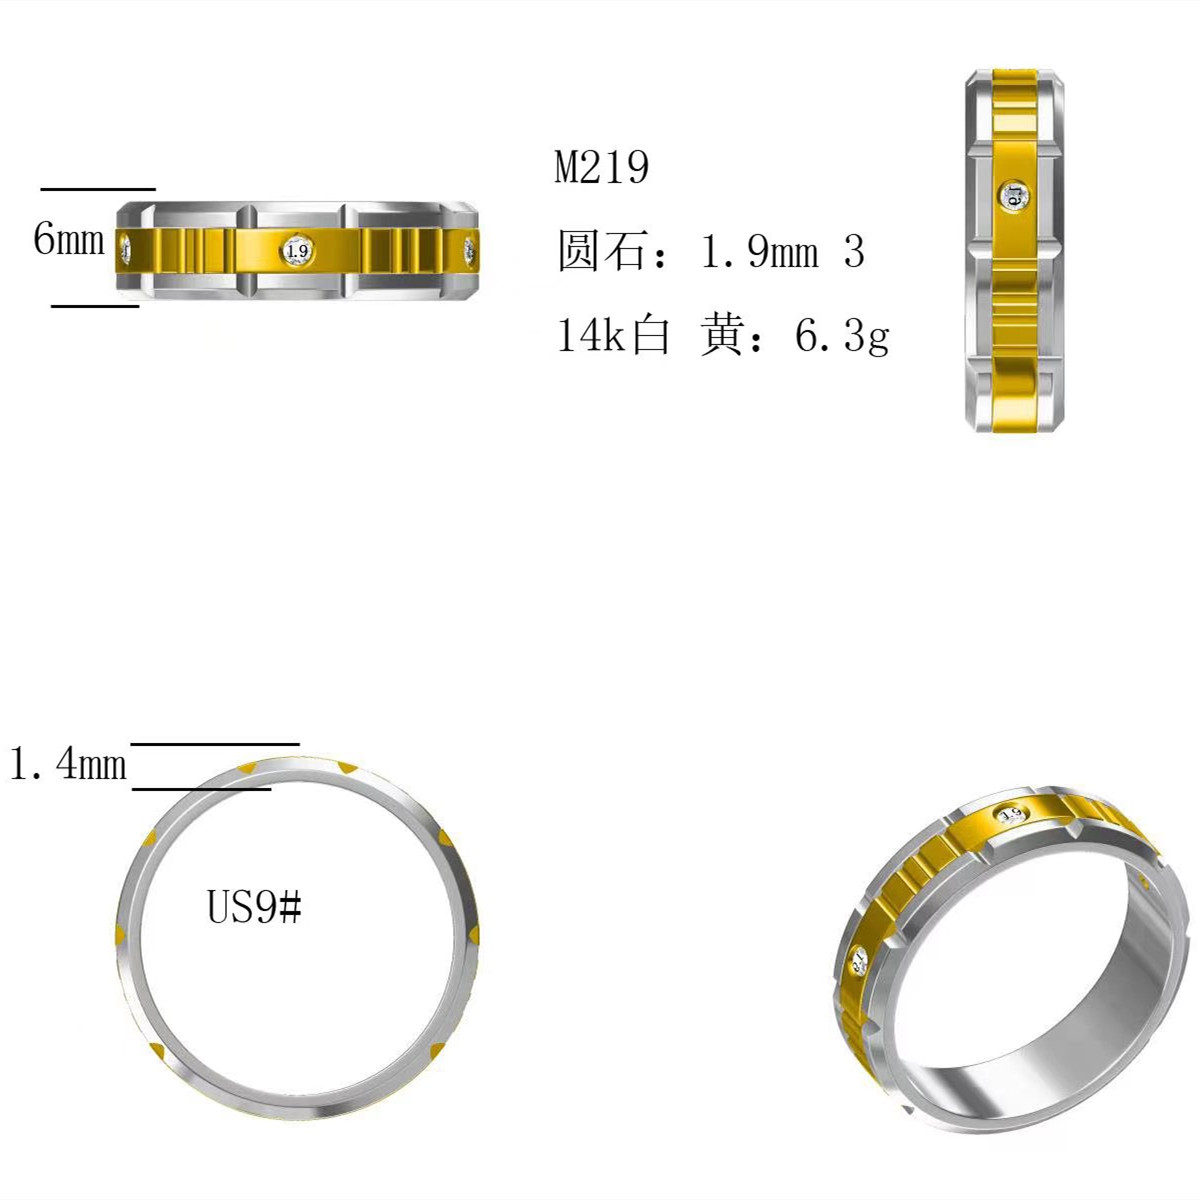 IGI lab diamond ring 14k gold engagement wedding band mens rings US9#